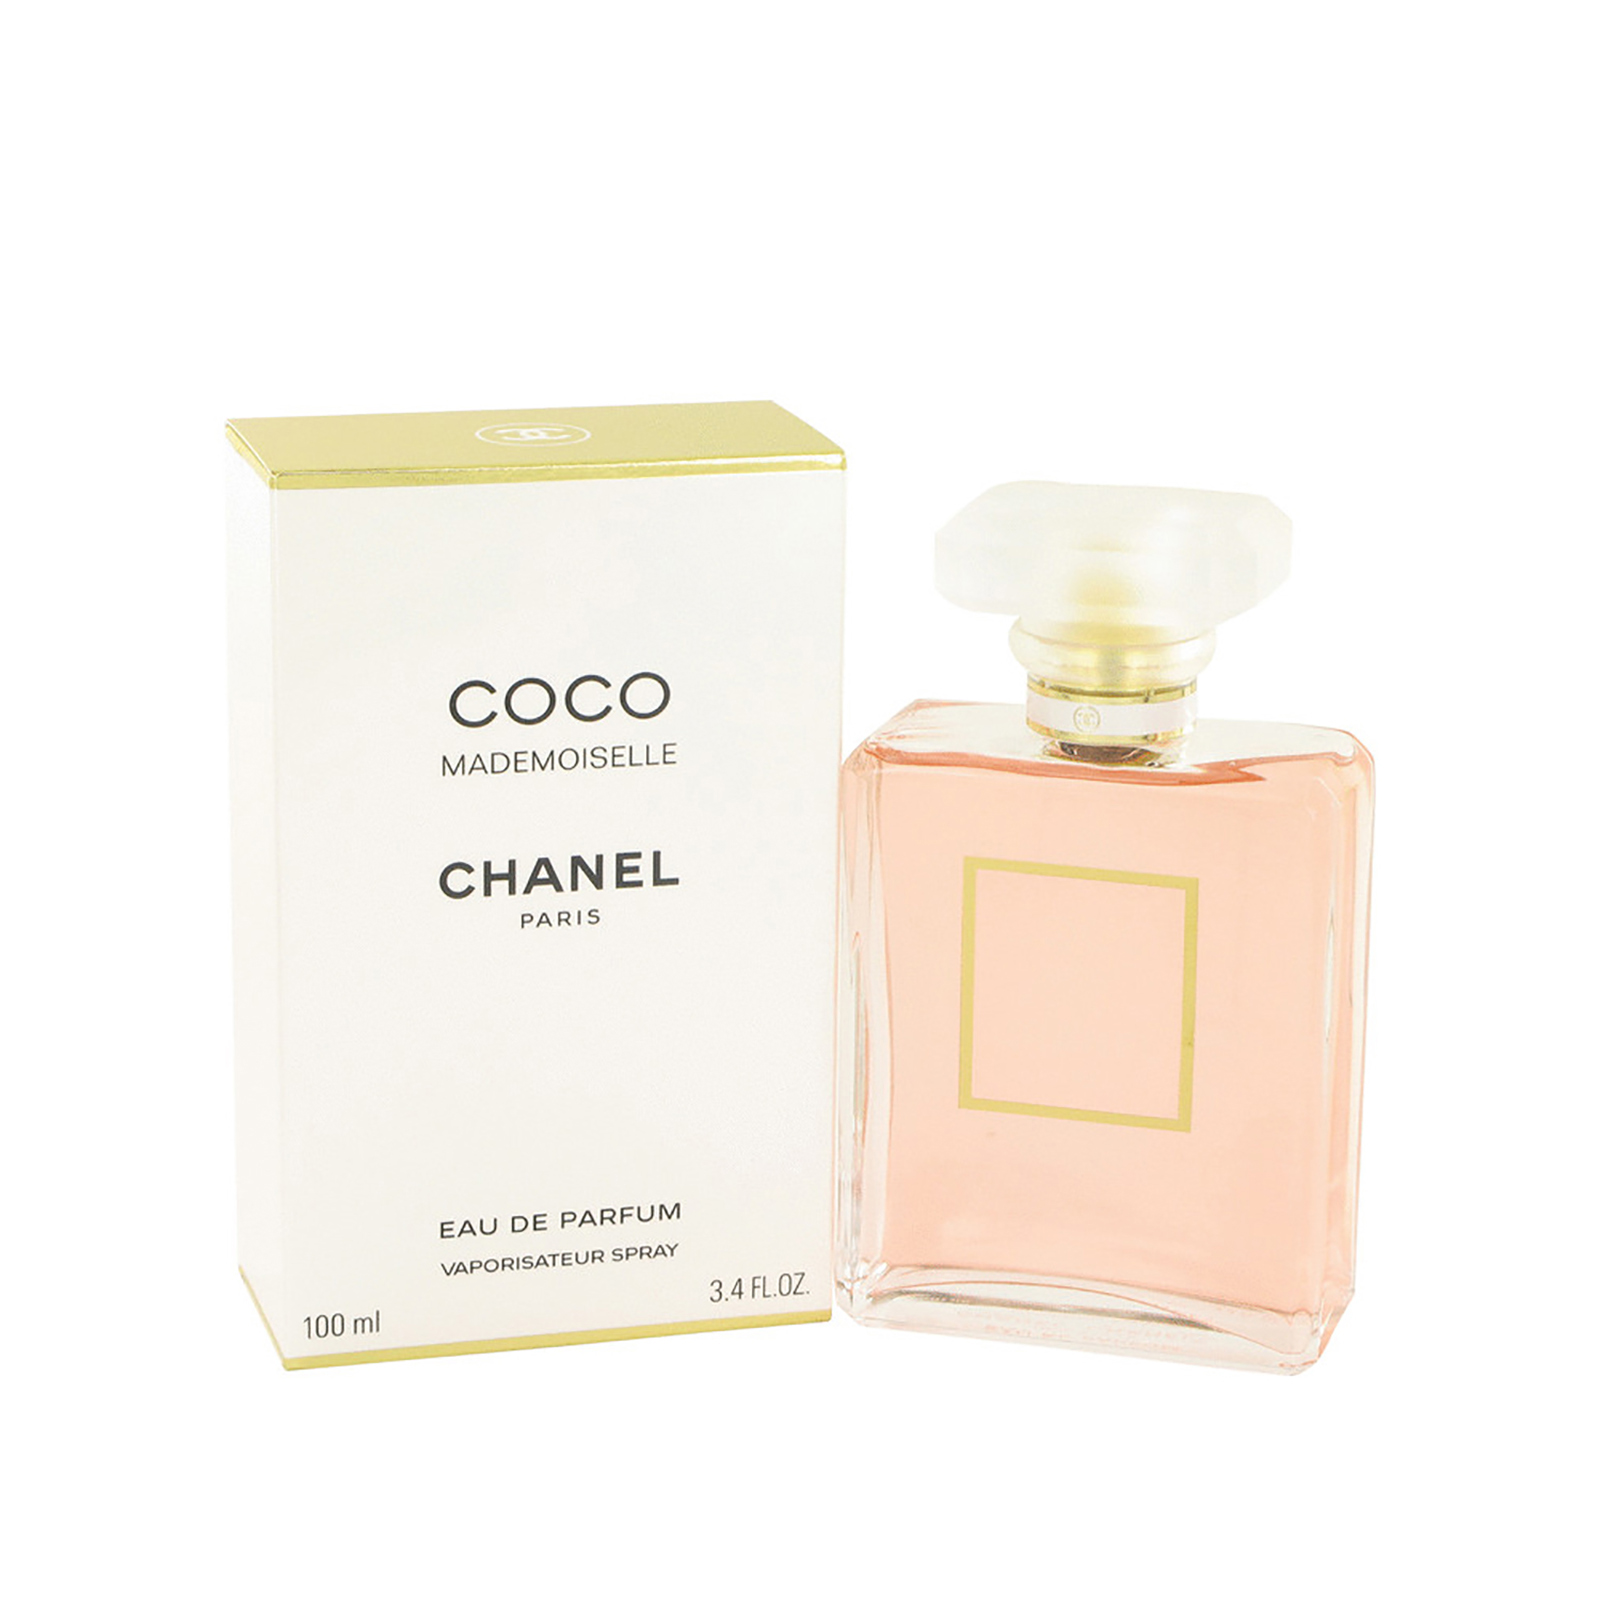 coco mademoiselle hair perfume - 1.2 fl. oz. chanel